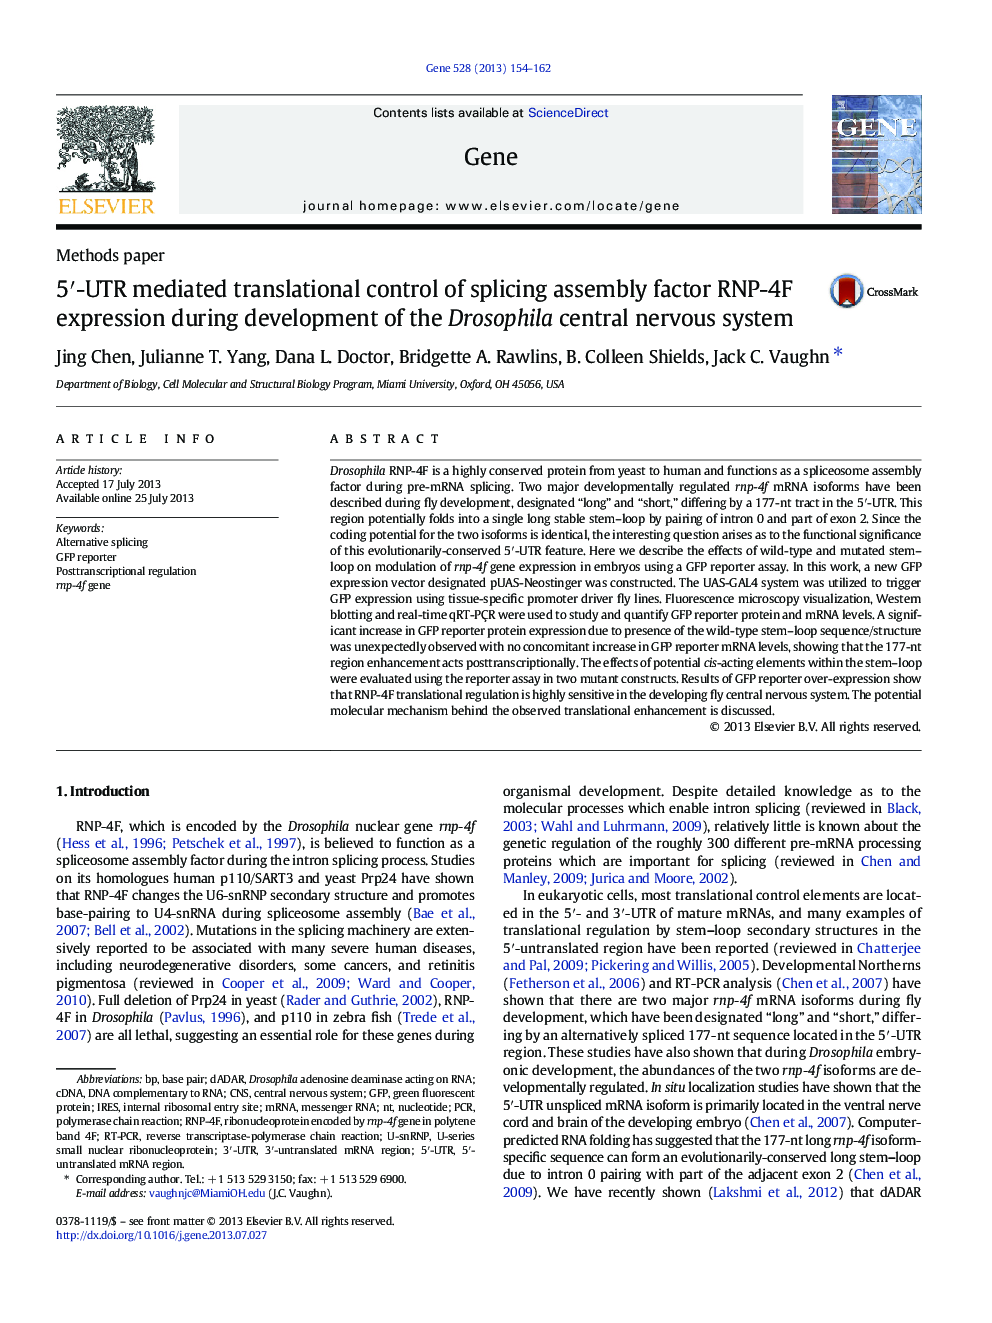 5′-UTR mediated translational control of splicing assembly factor RNP-4F expression during development of the Drosophila central nervous system